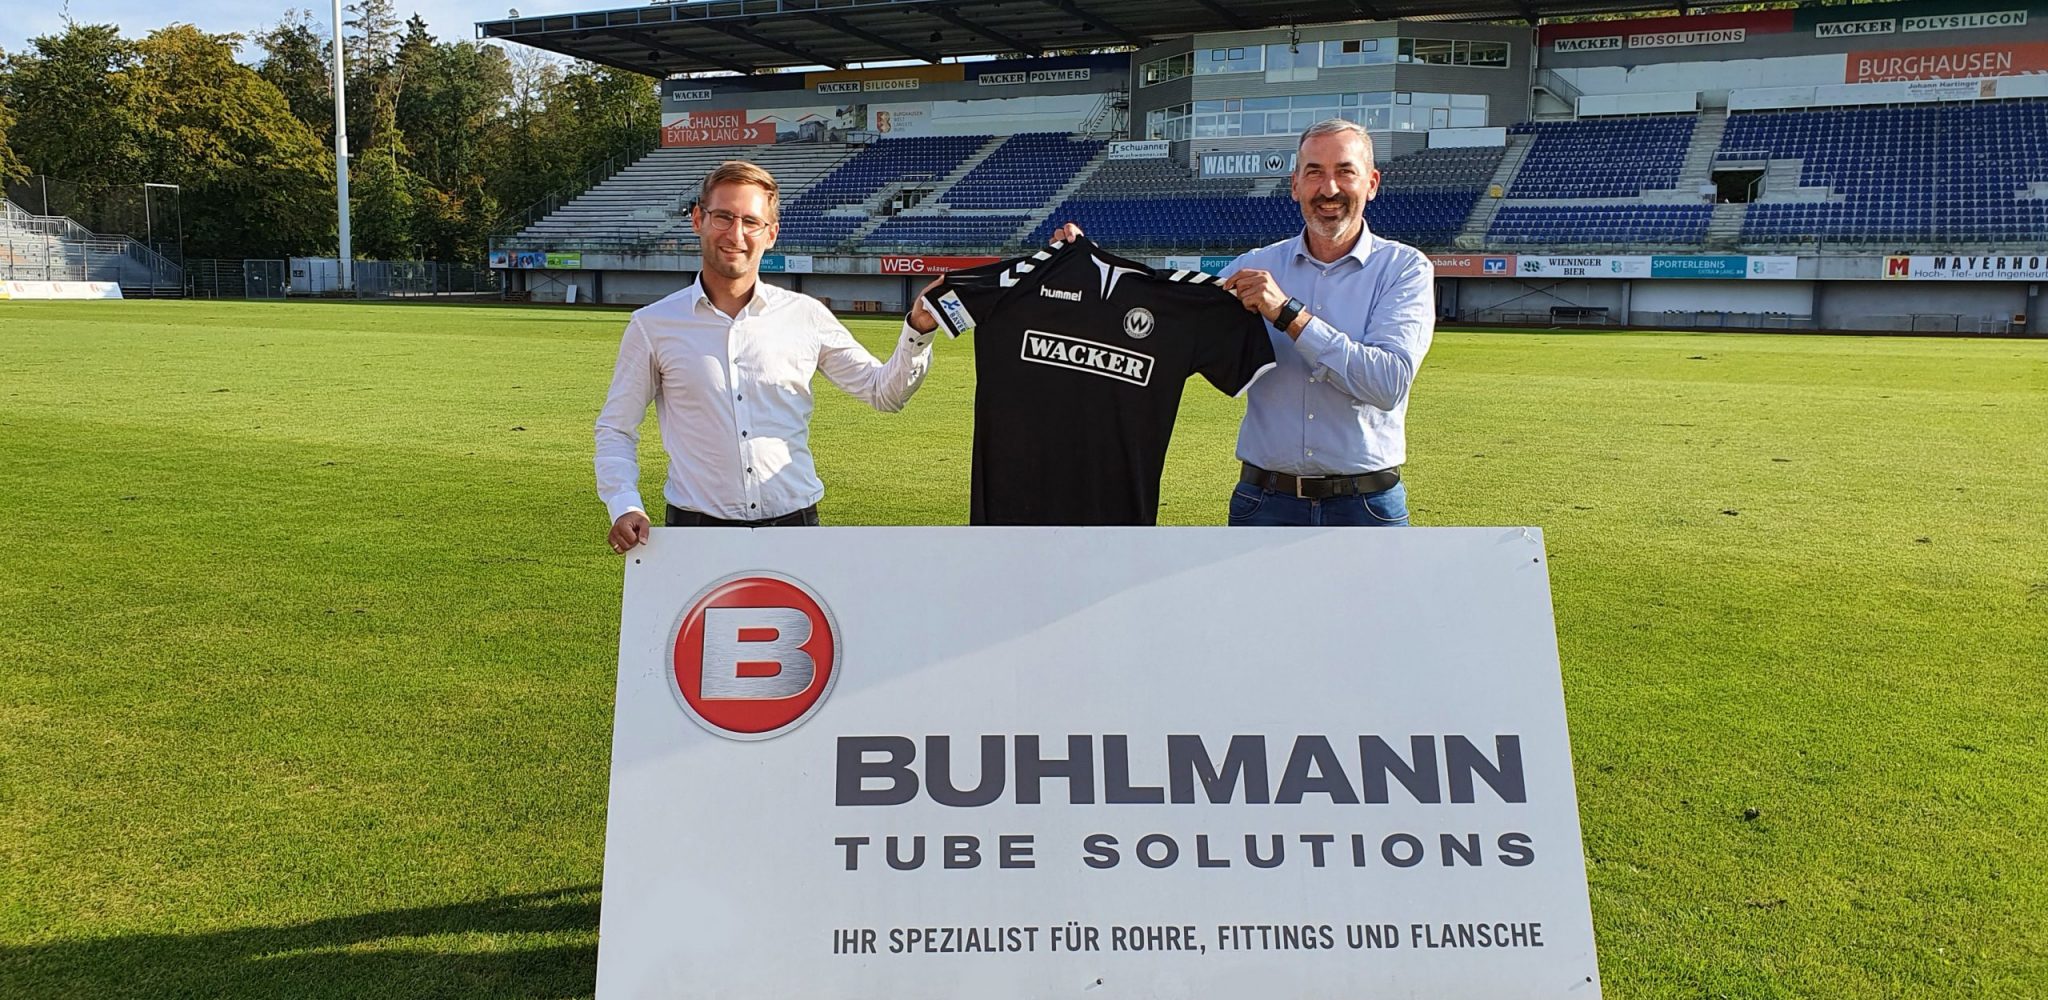 Stefan Schmid, Head of Sales bei der Buhlmann Gruppe (rechts) mit Andreas Huber vom SV Wacker